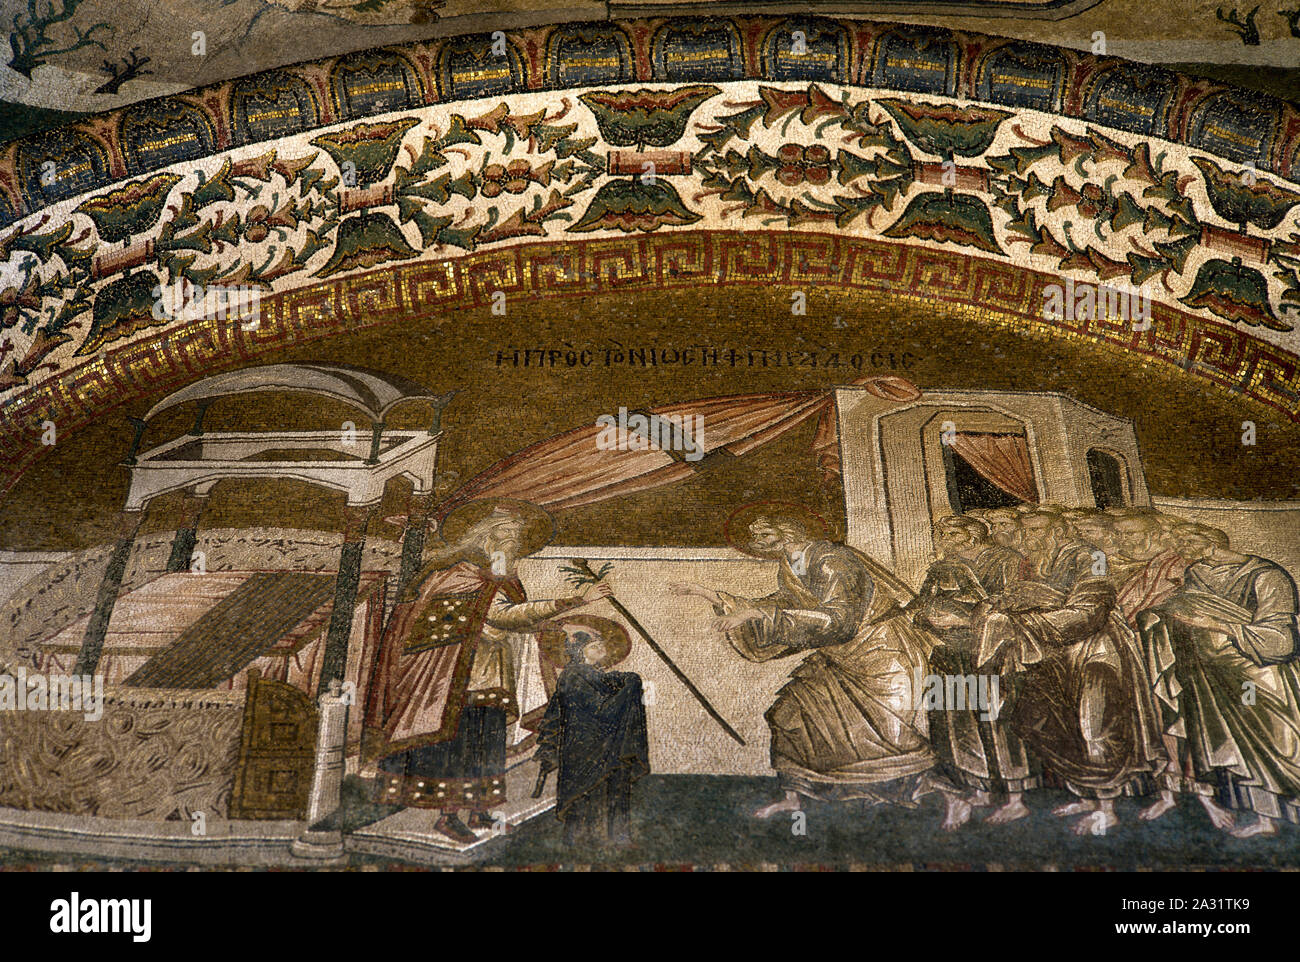 Chora Church. Medieval Byzantine Greek Orthodox church. Mosaics. Cycle of the Life of the Virgin. Virgin Mary entrusted to Joseph. 14th century. Istanbul, Turkey. Stock Photo